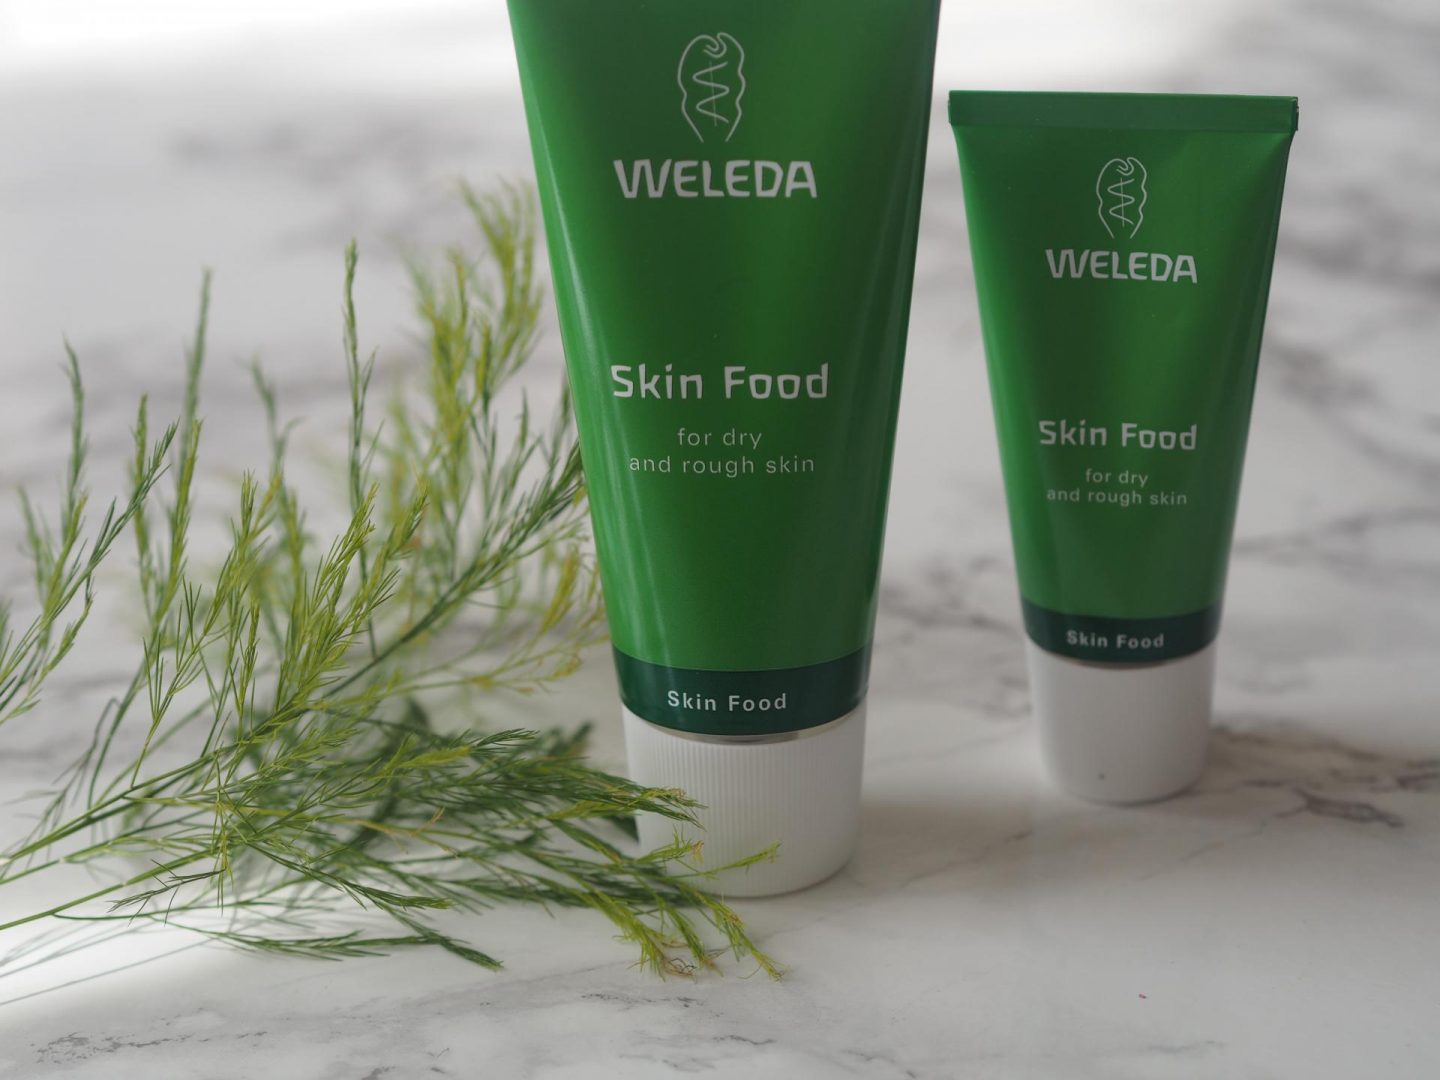 Weleda Celebrates 90 Years of Skin Food!